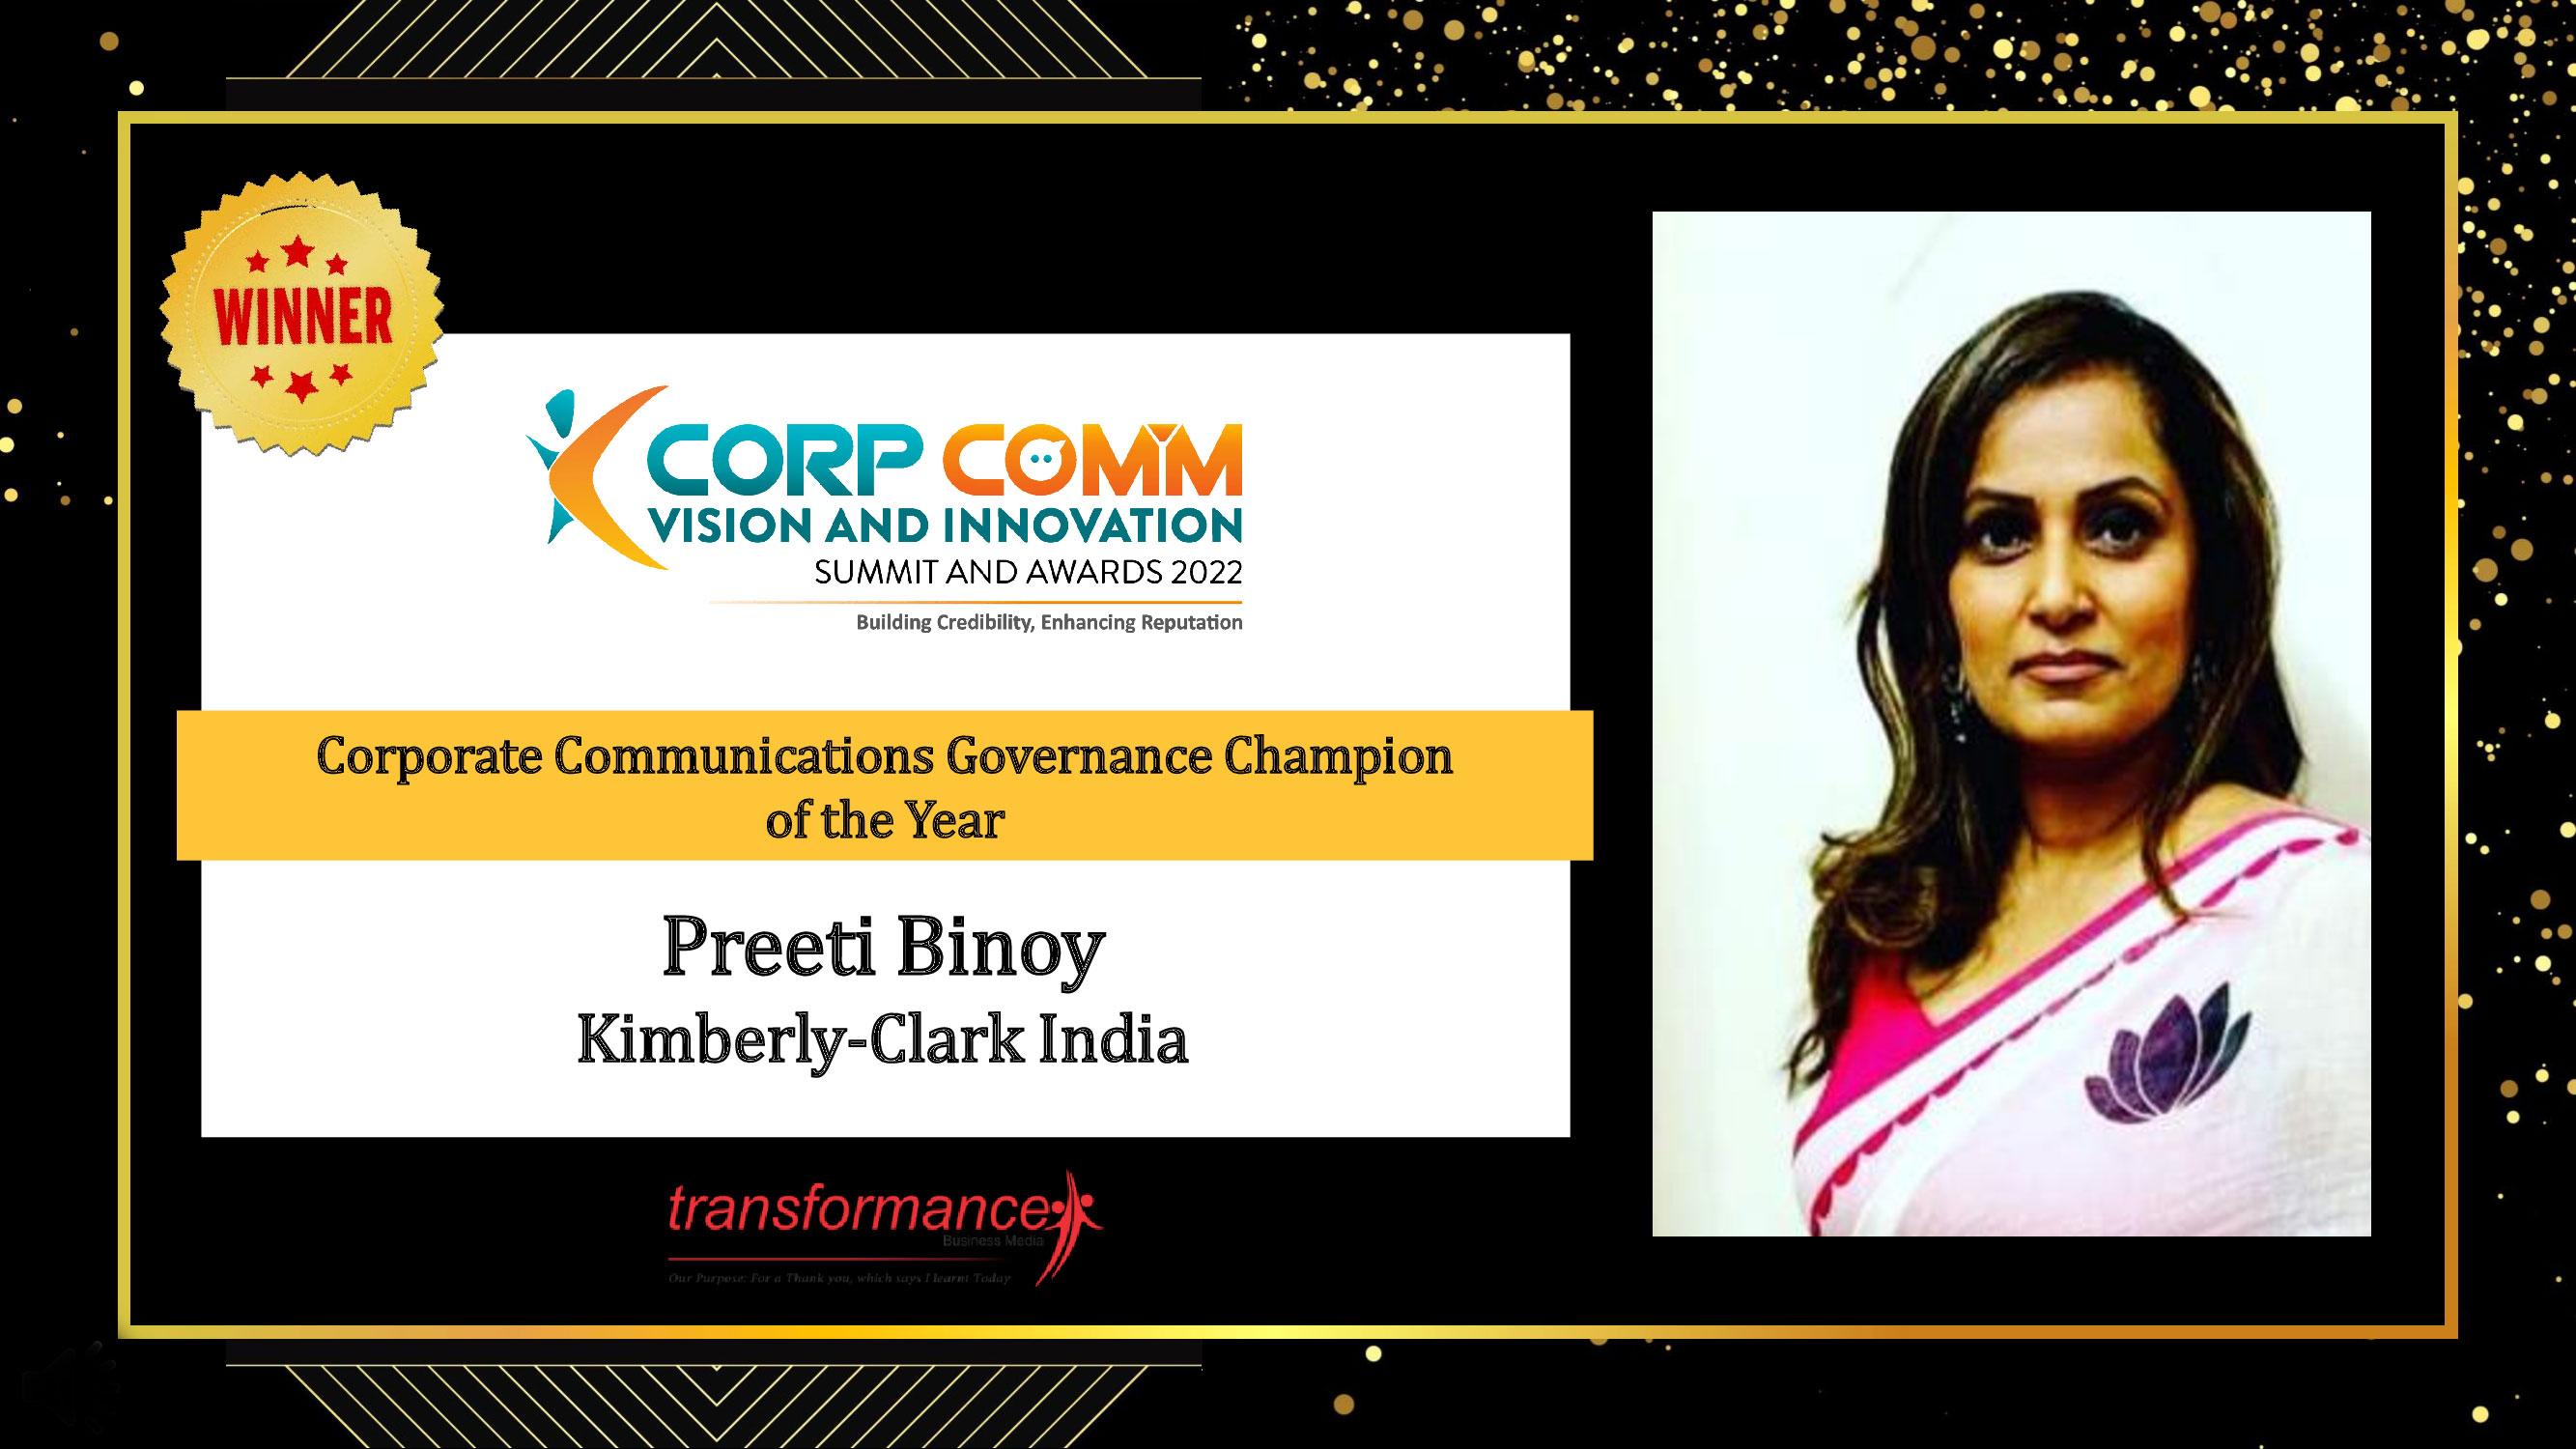 Preeti Binoy, Kimberly-Clark India